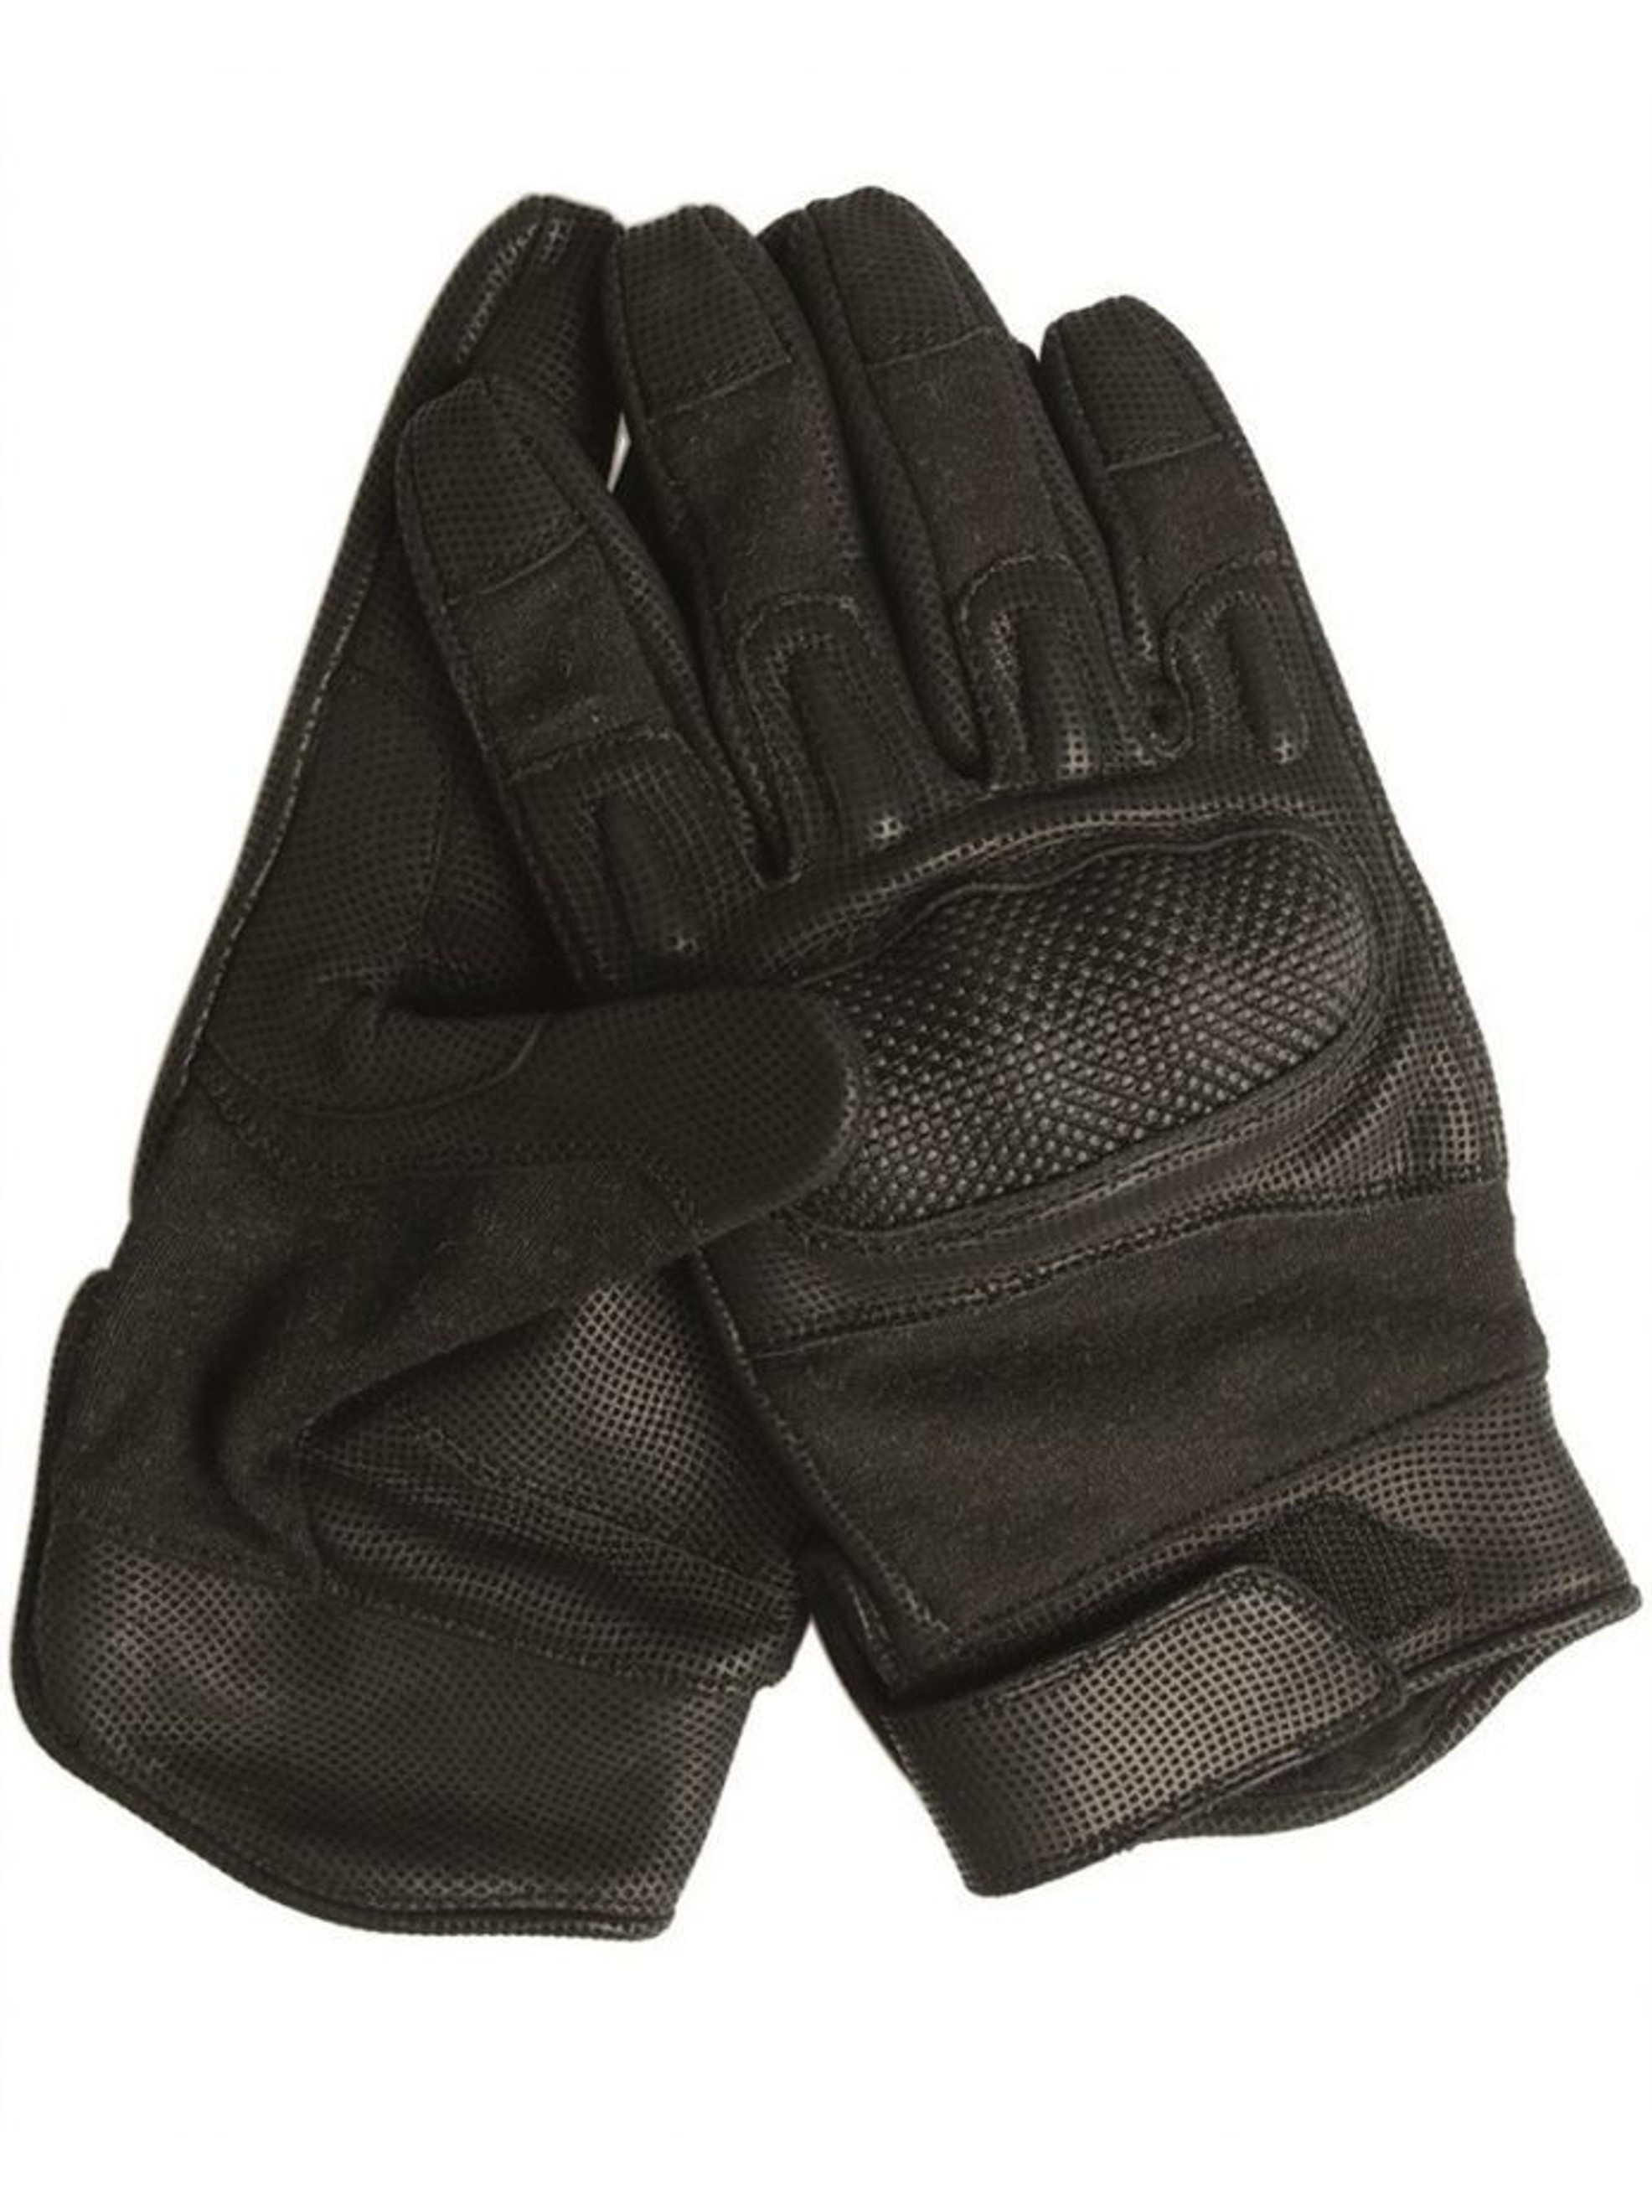 Mil-Tec Black Nomax Action Gloves